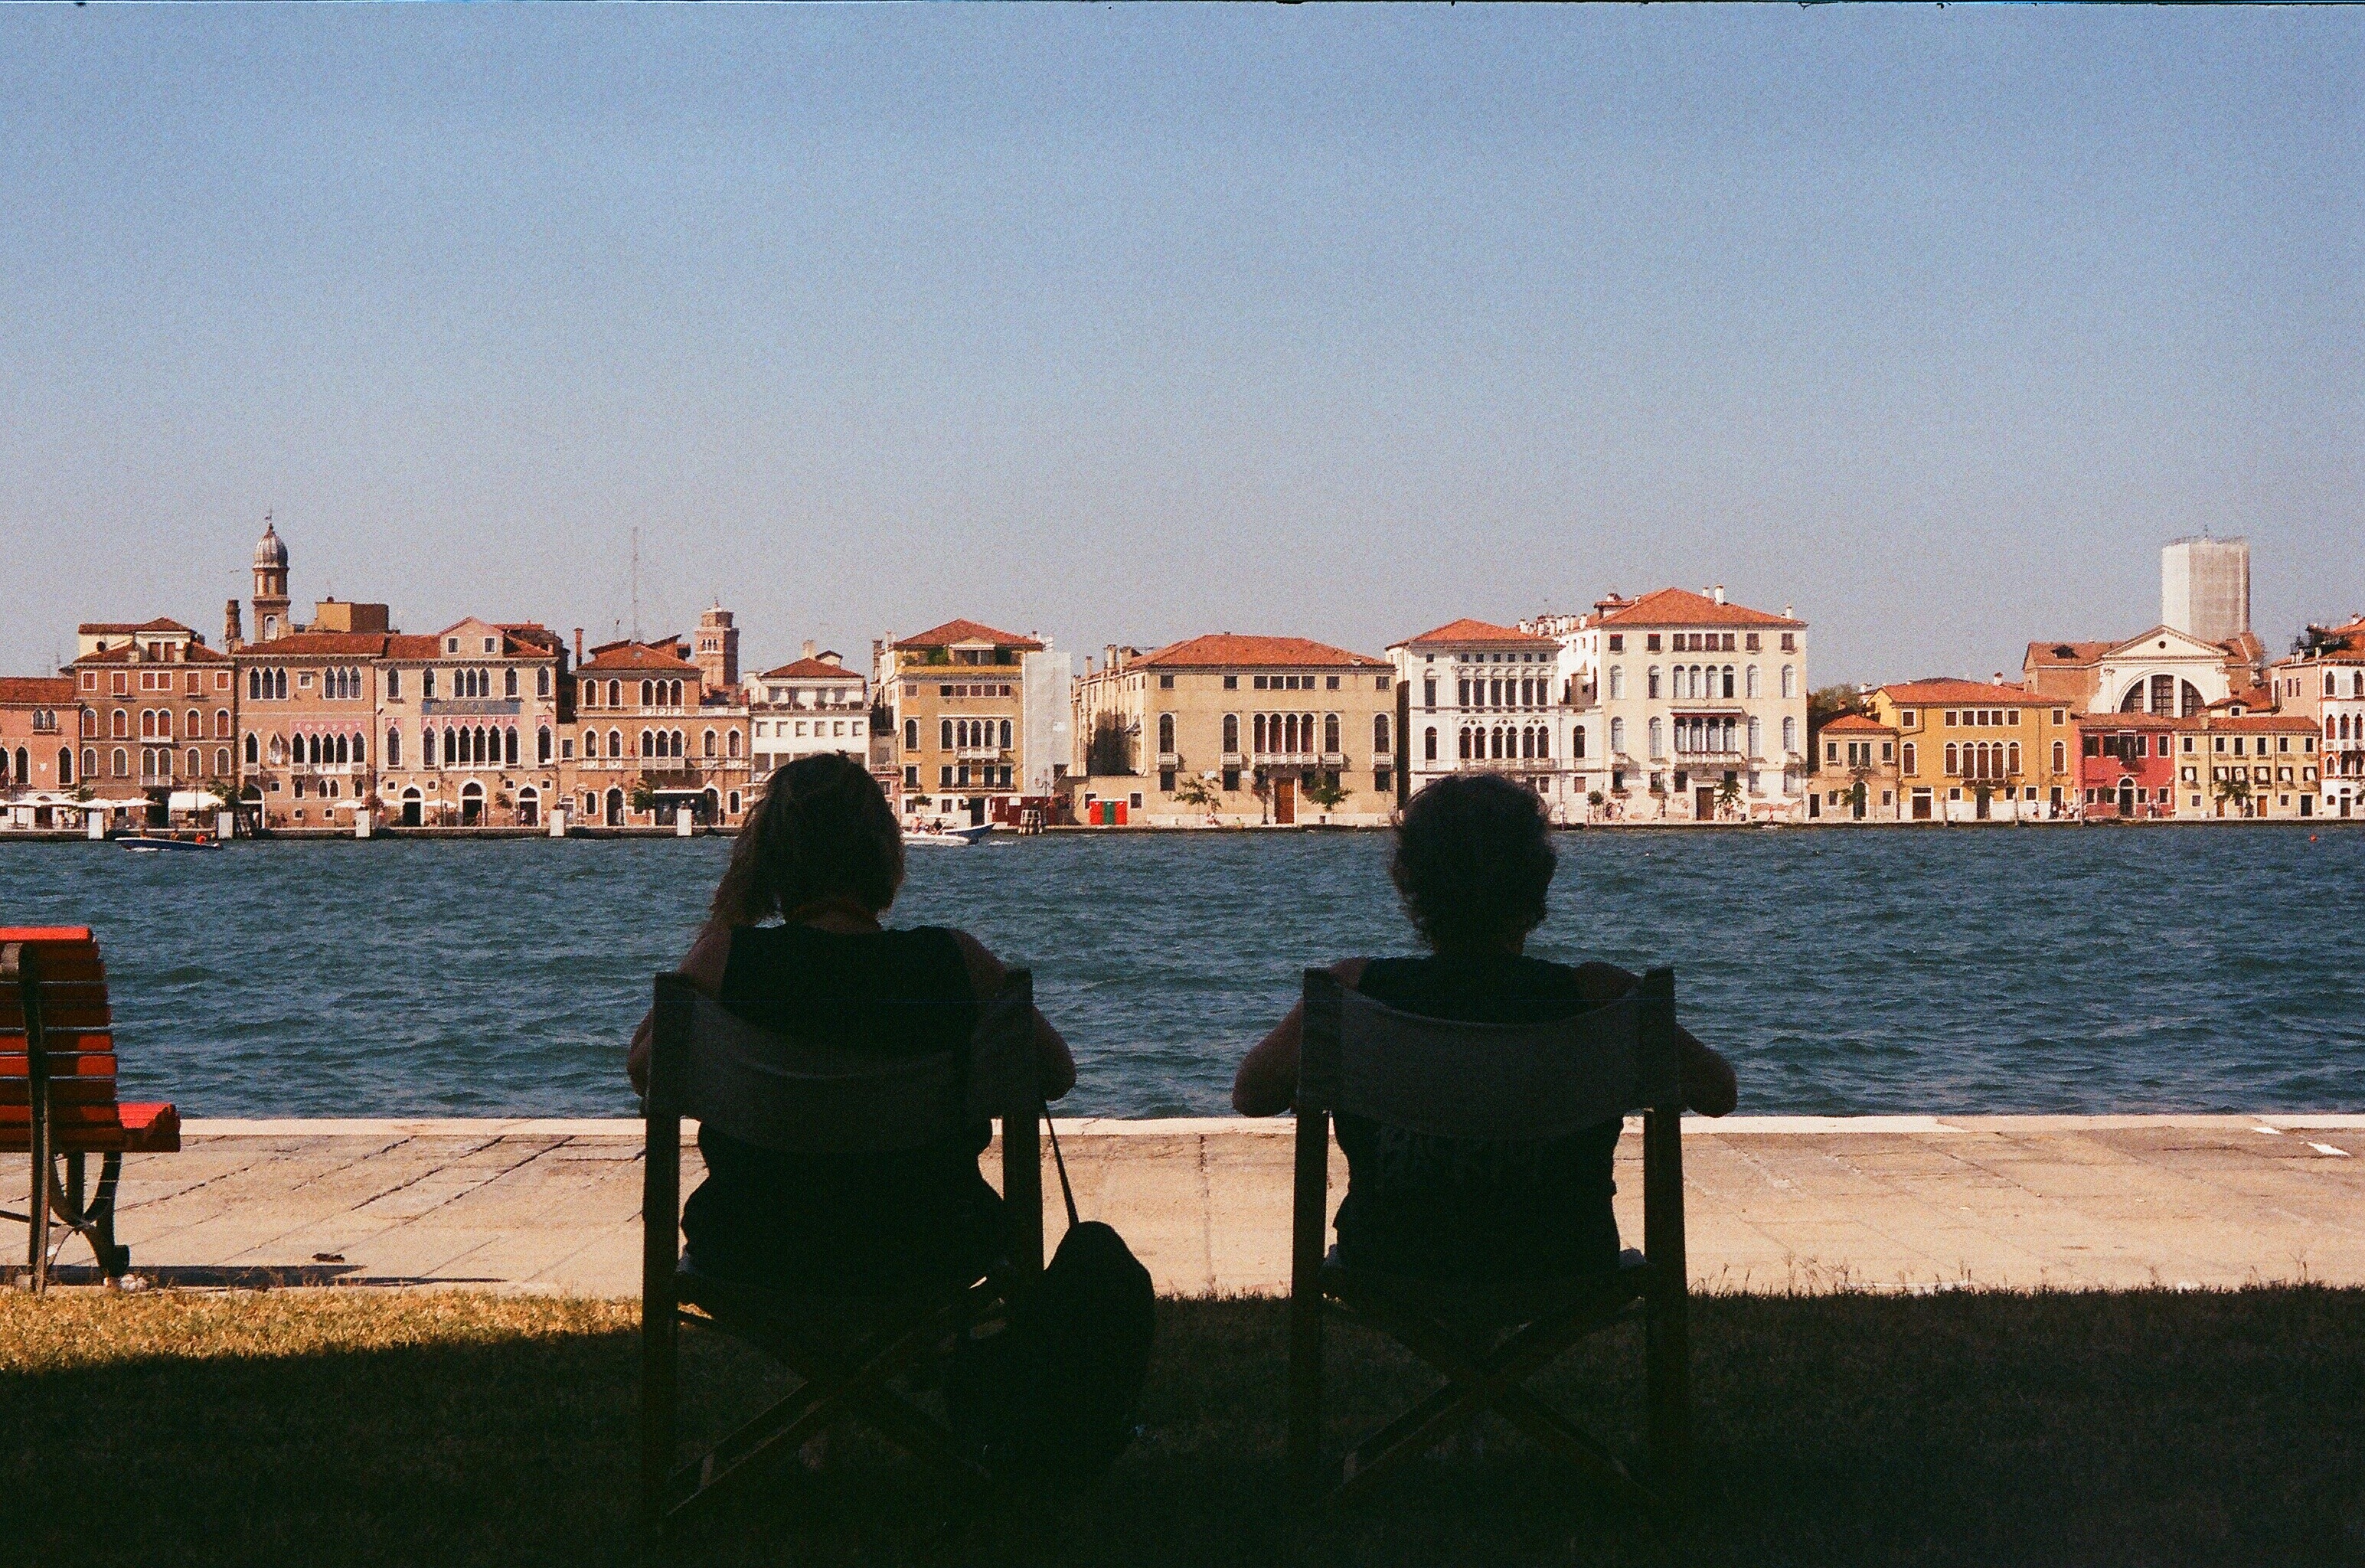 Venice in summer
#streetphoto #35mm #filmphoto (2)